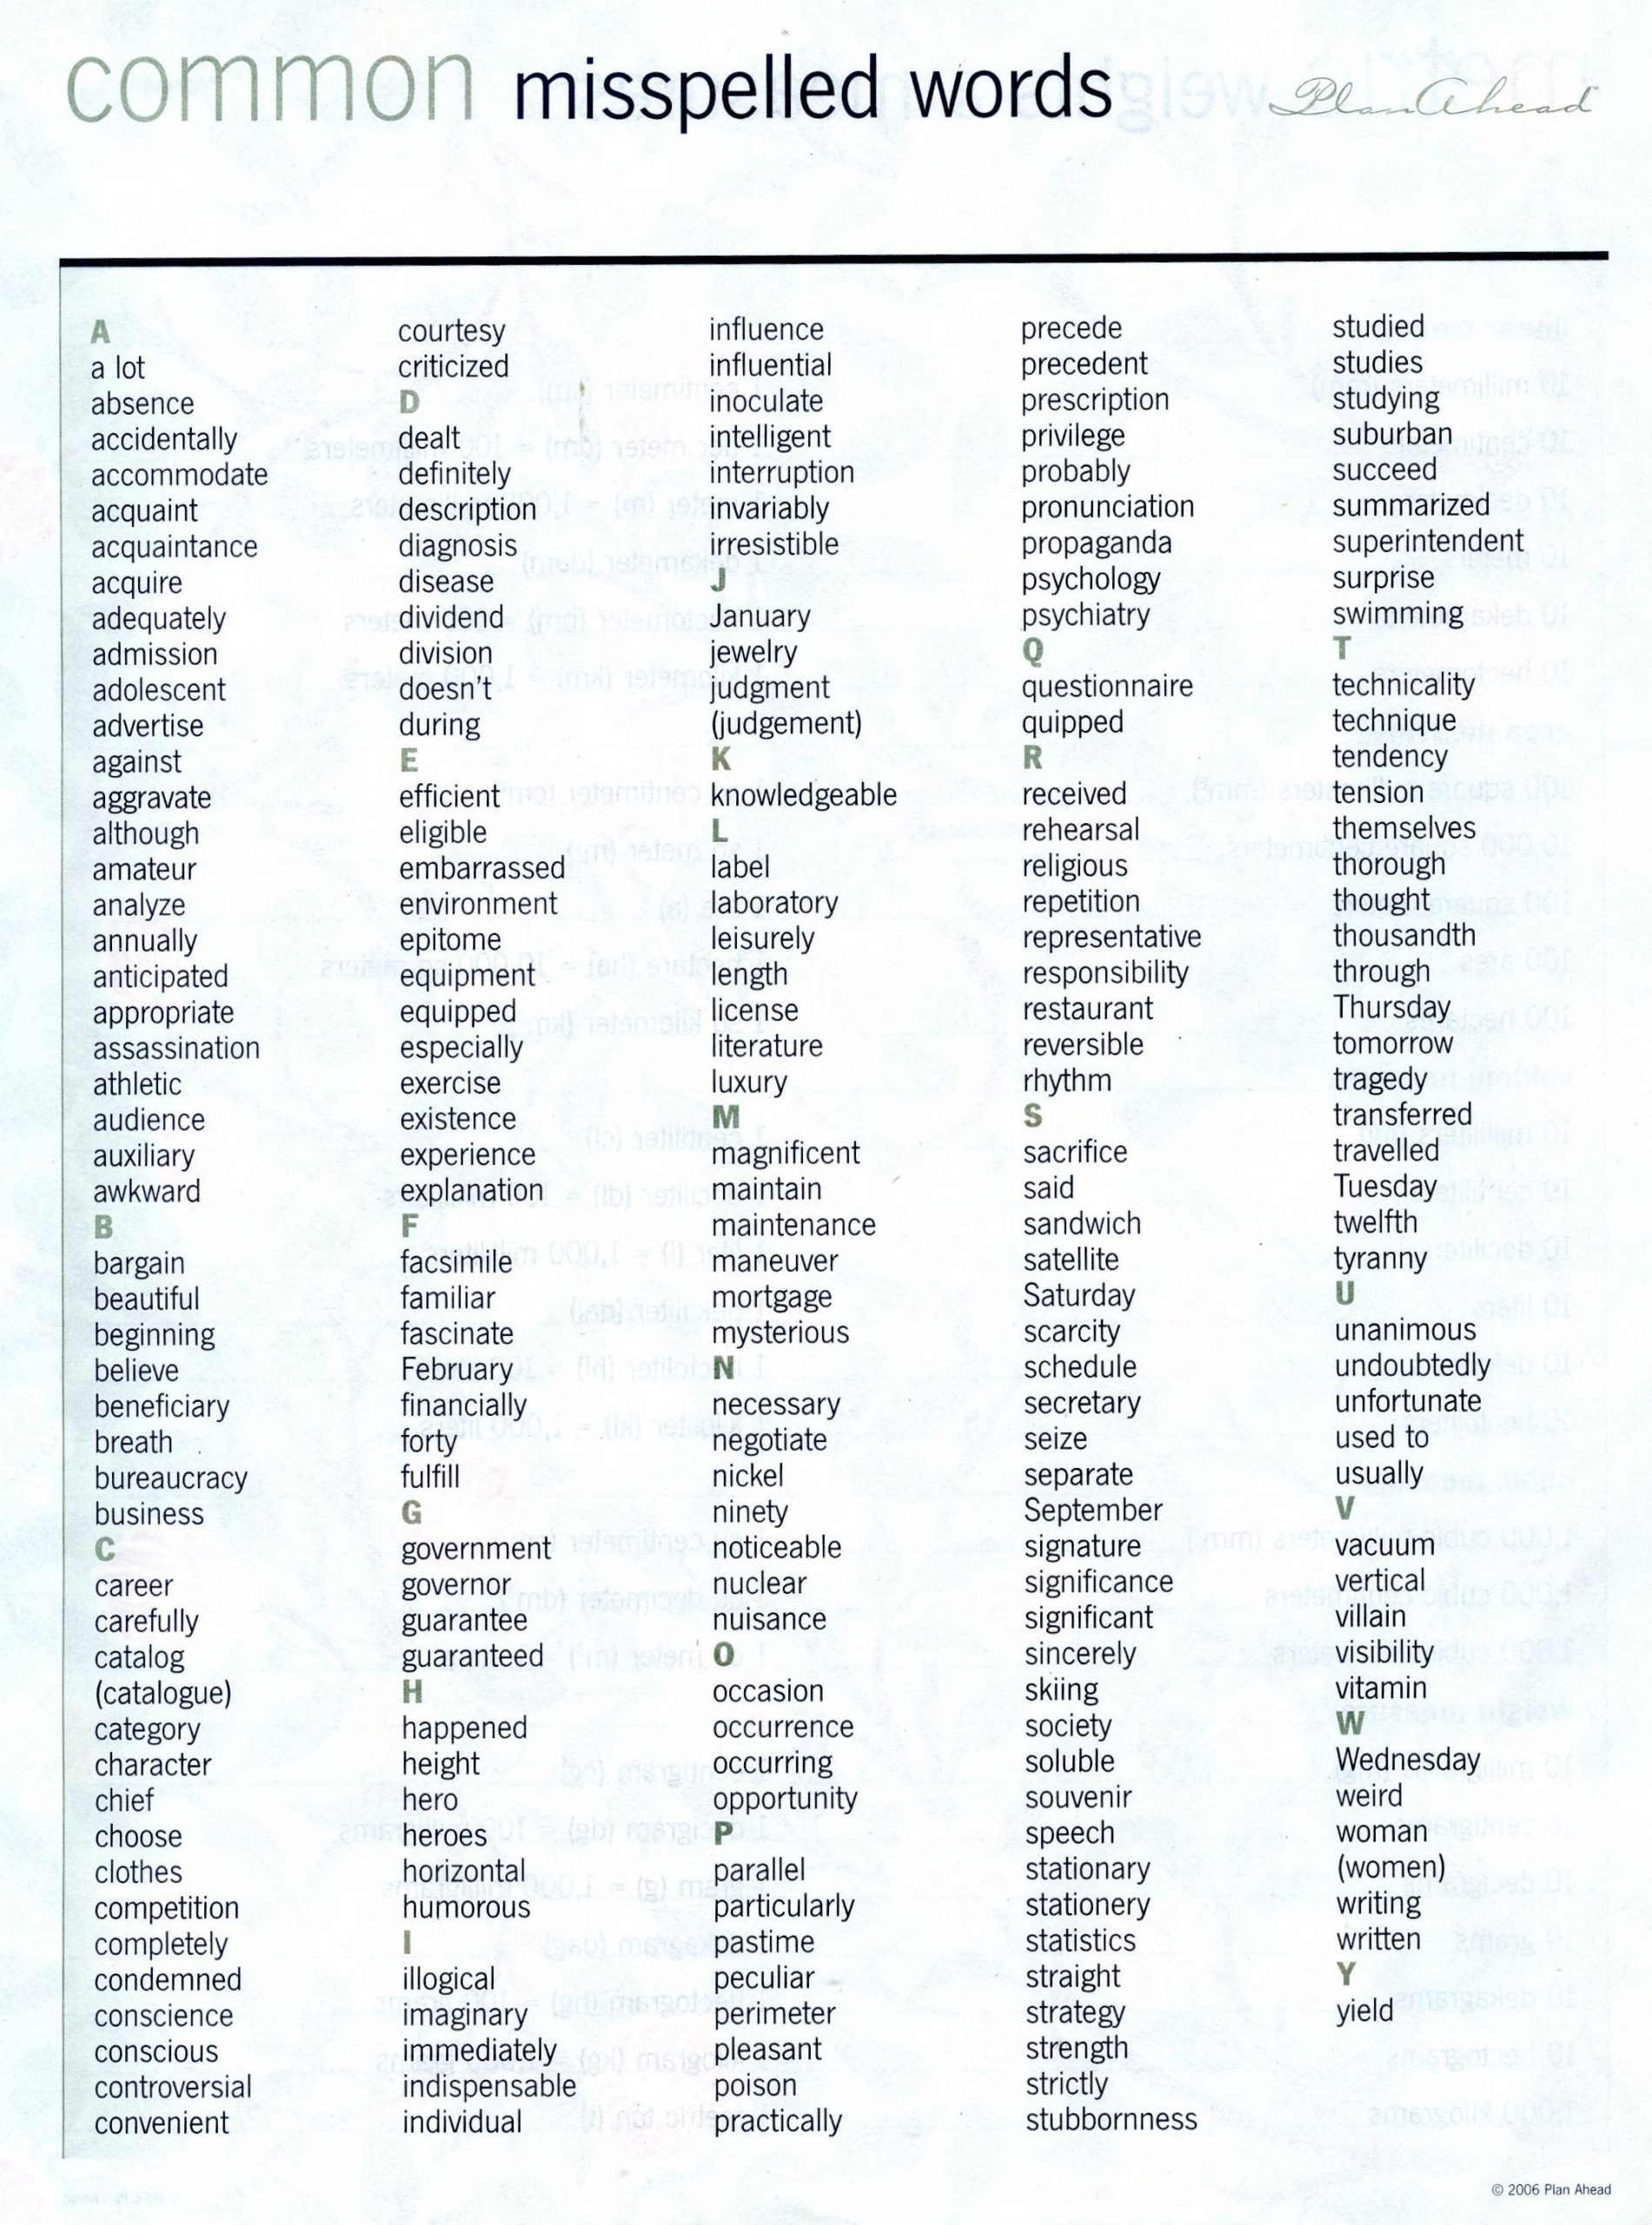 Commonly Misspelled Words Worksheet Mon Misspelled Words